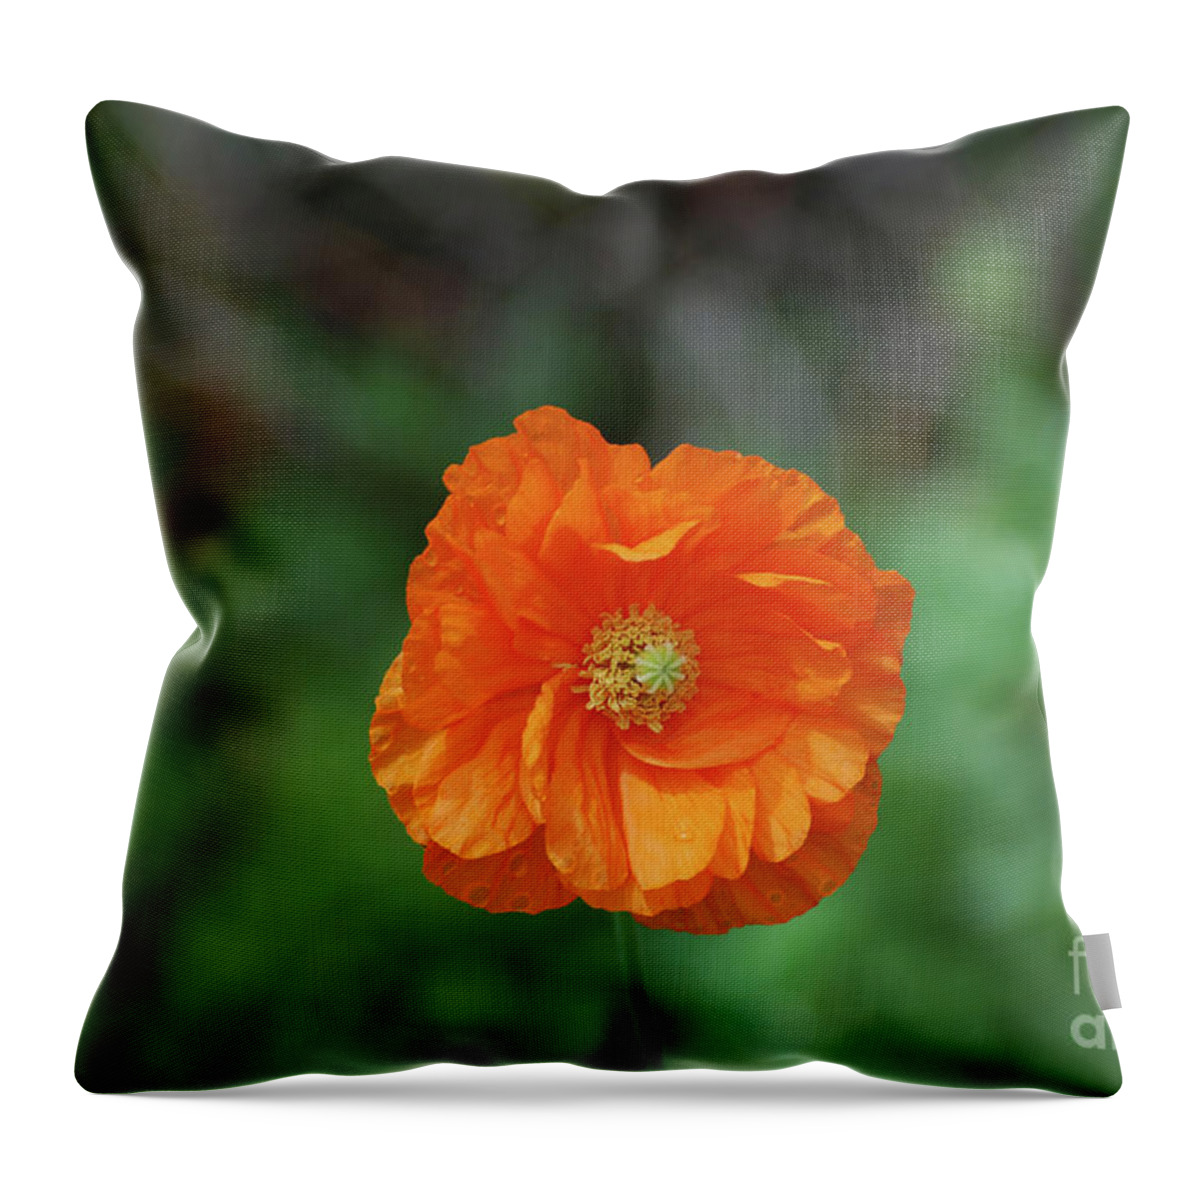 Poppy Throw Pillow featuring the photograph Perfect Orange California Poppy Flower Blossom by DejaVu Designs